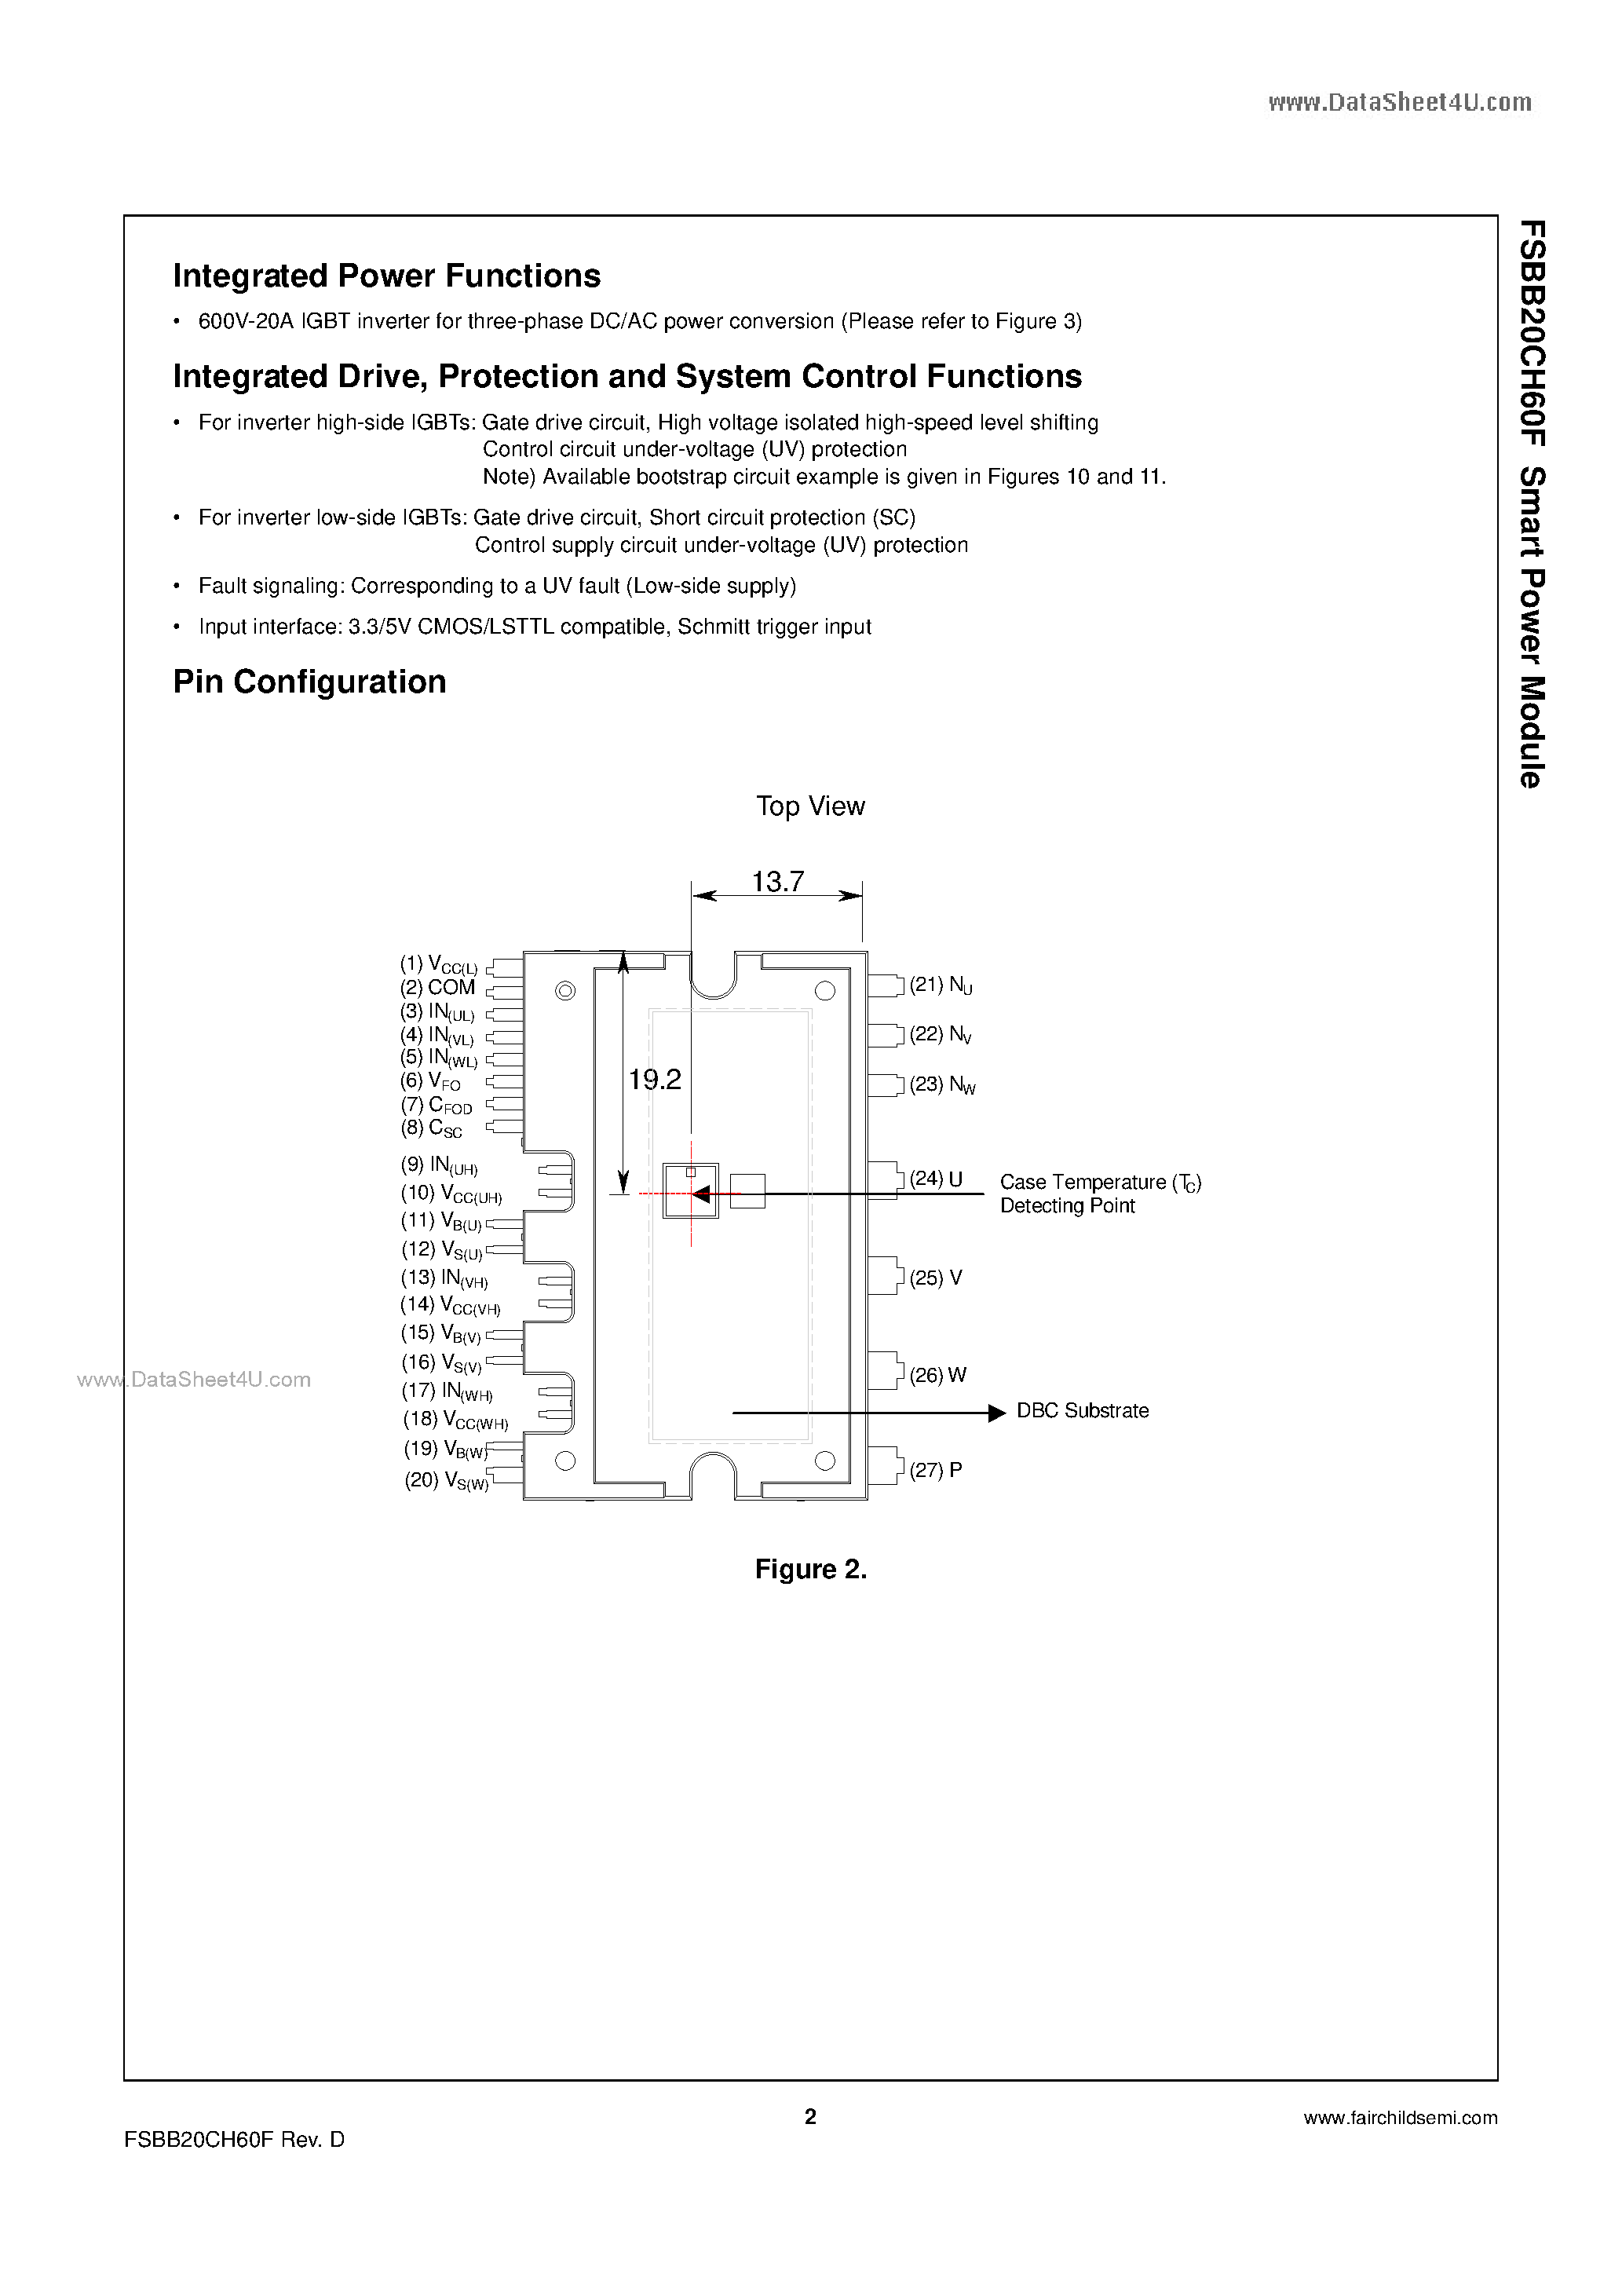 Datasheet FSBB20CH60F - Smart Power Module page 2